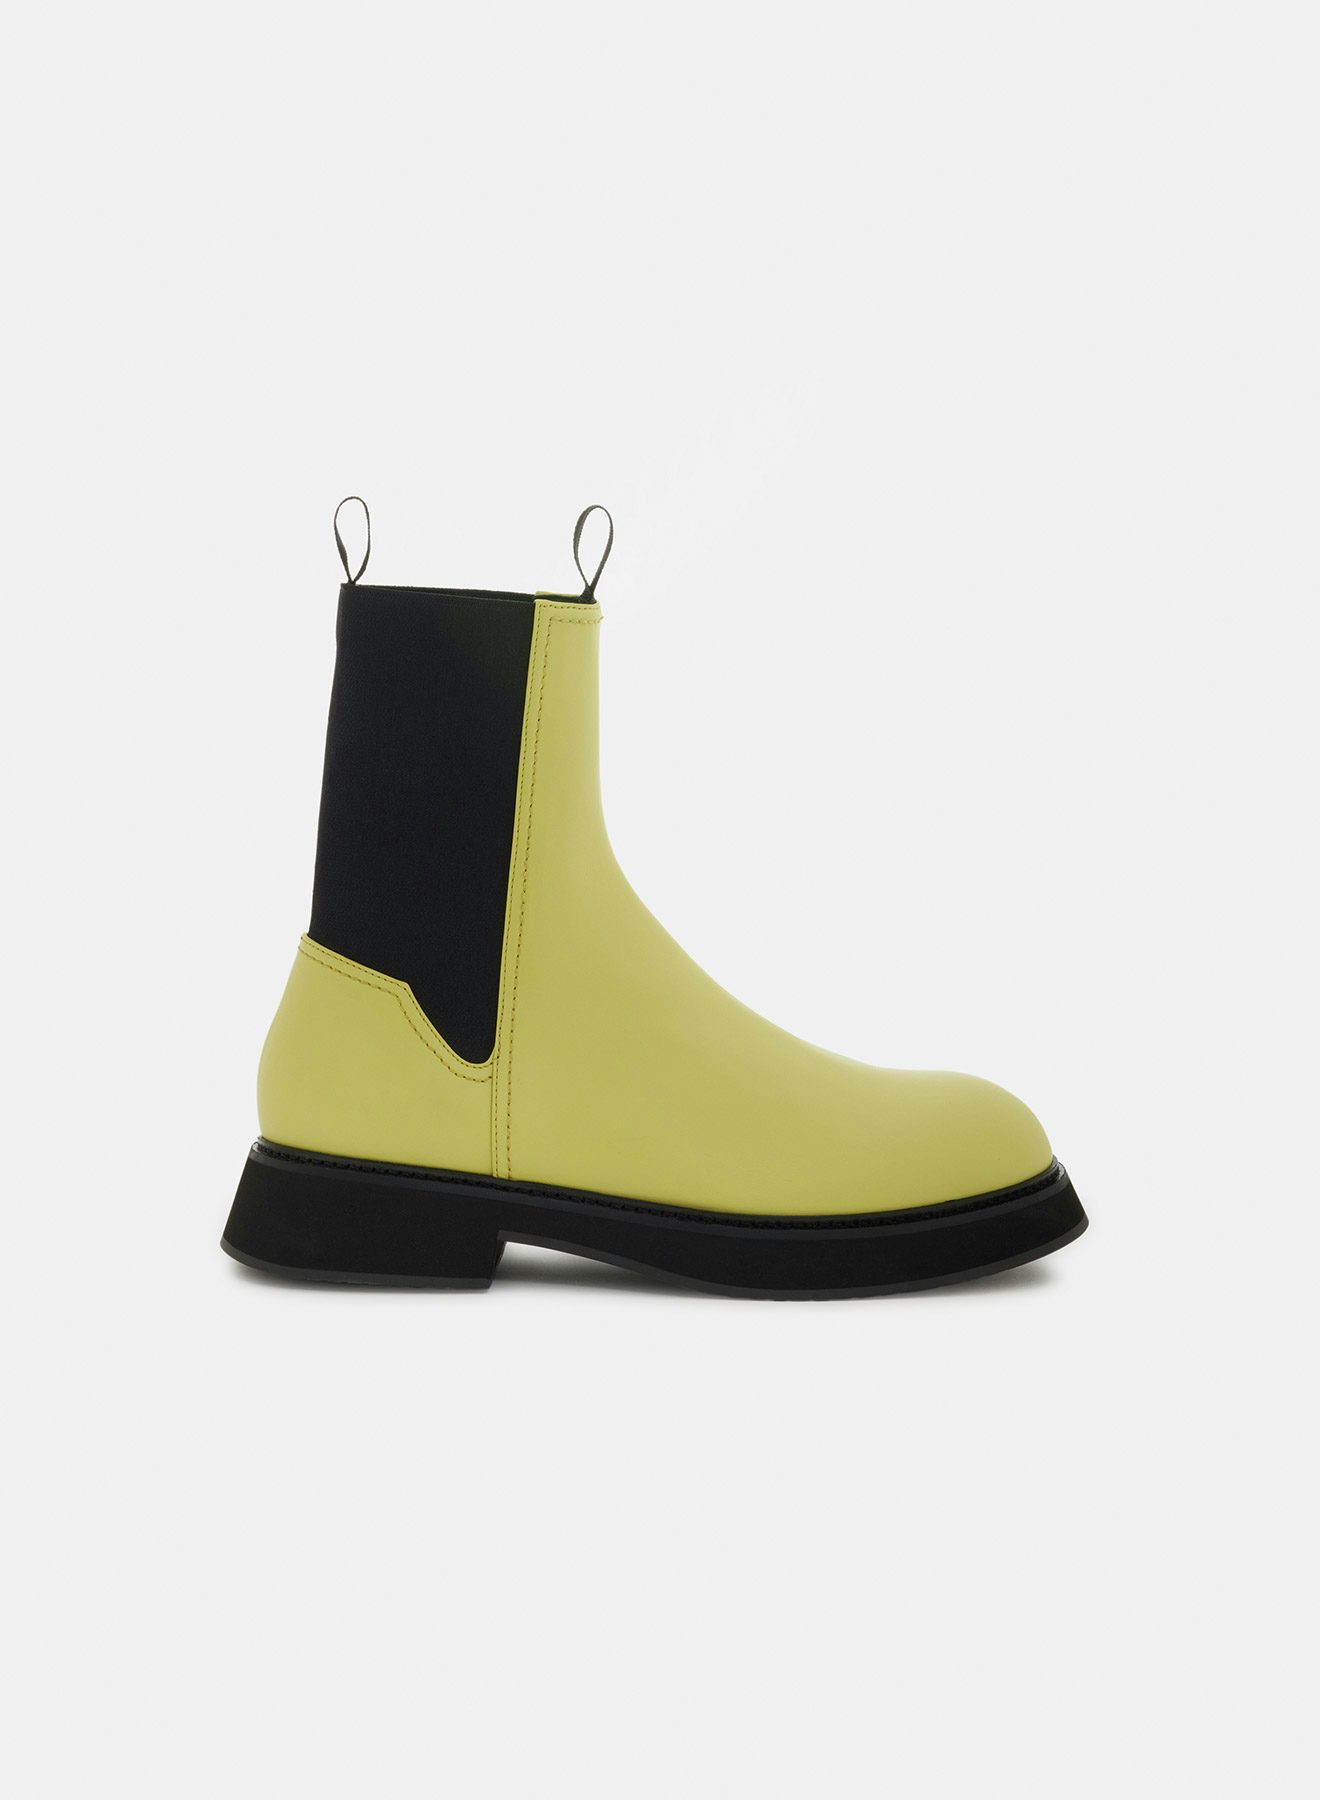 Calf leather boots olive green - Nina Ricci